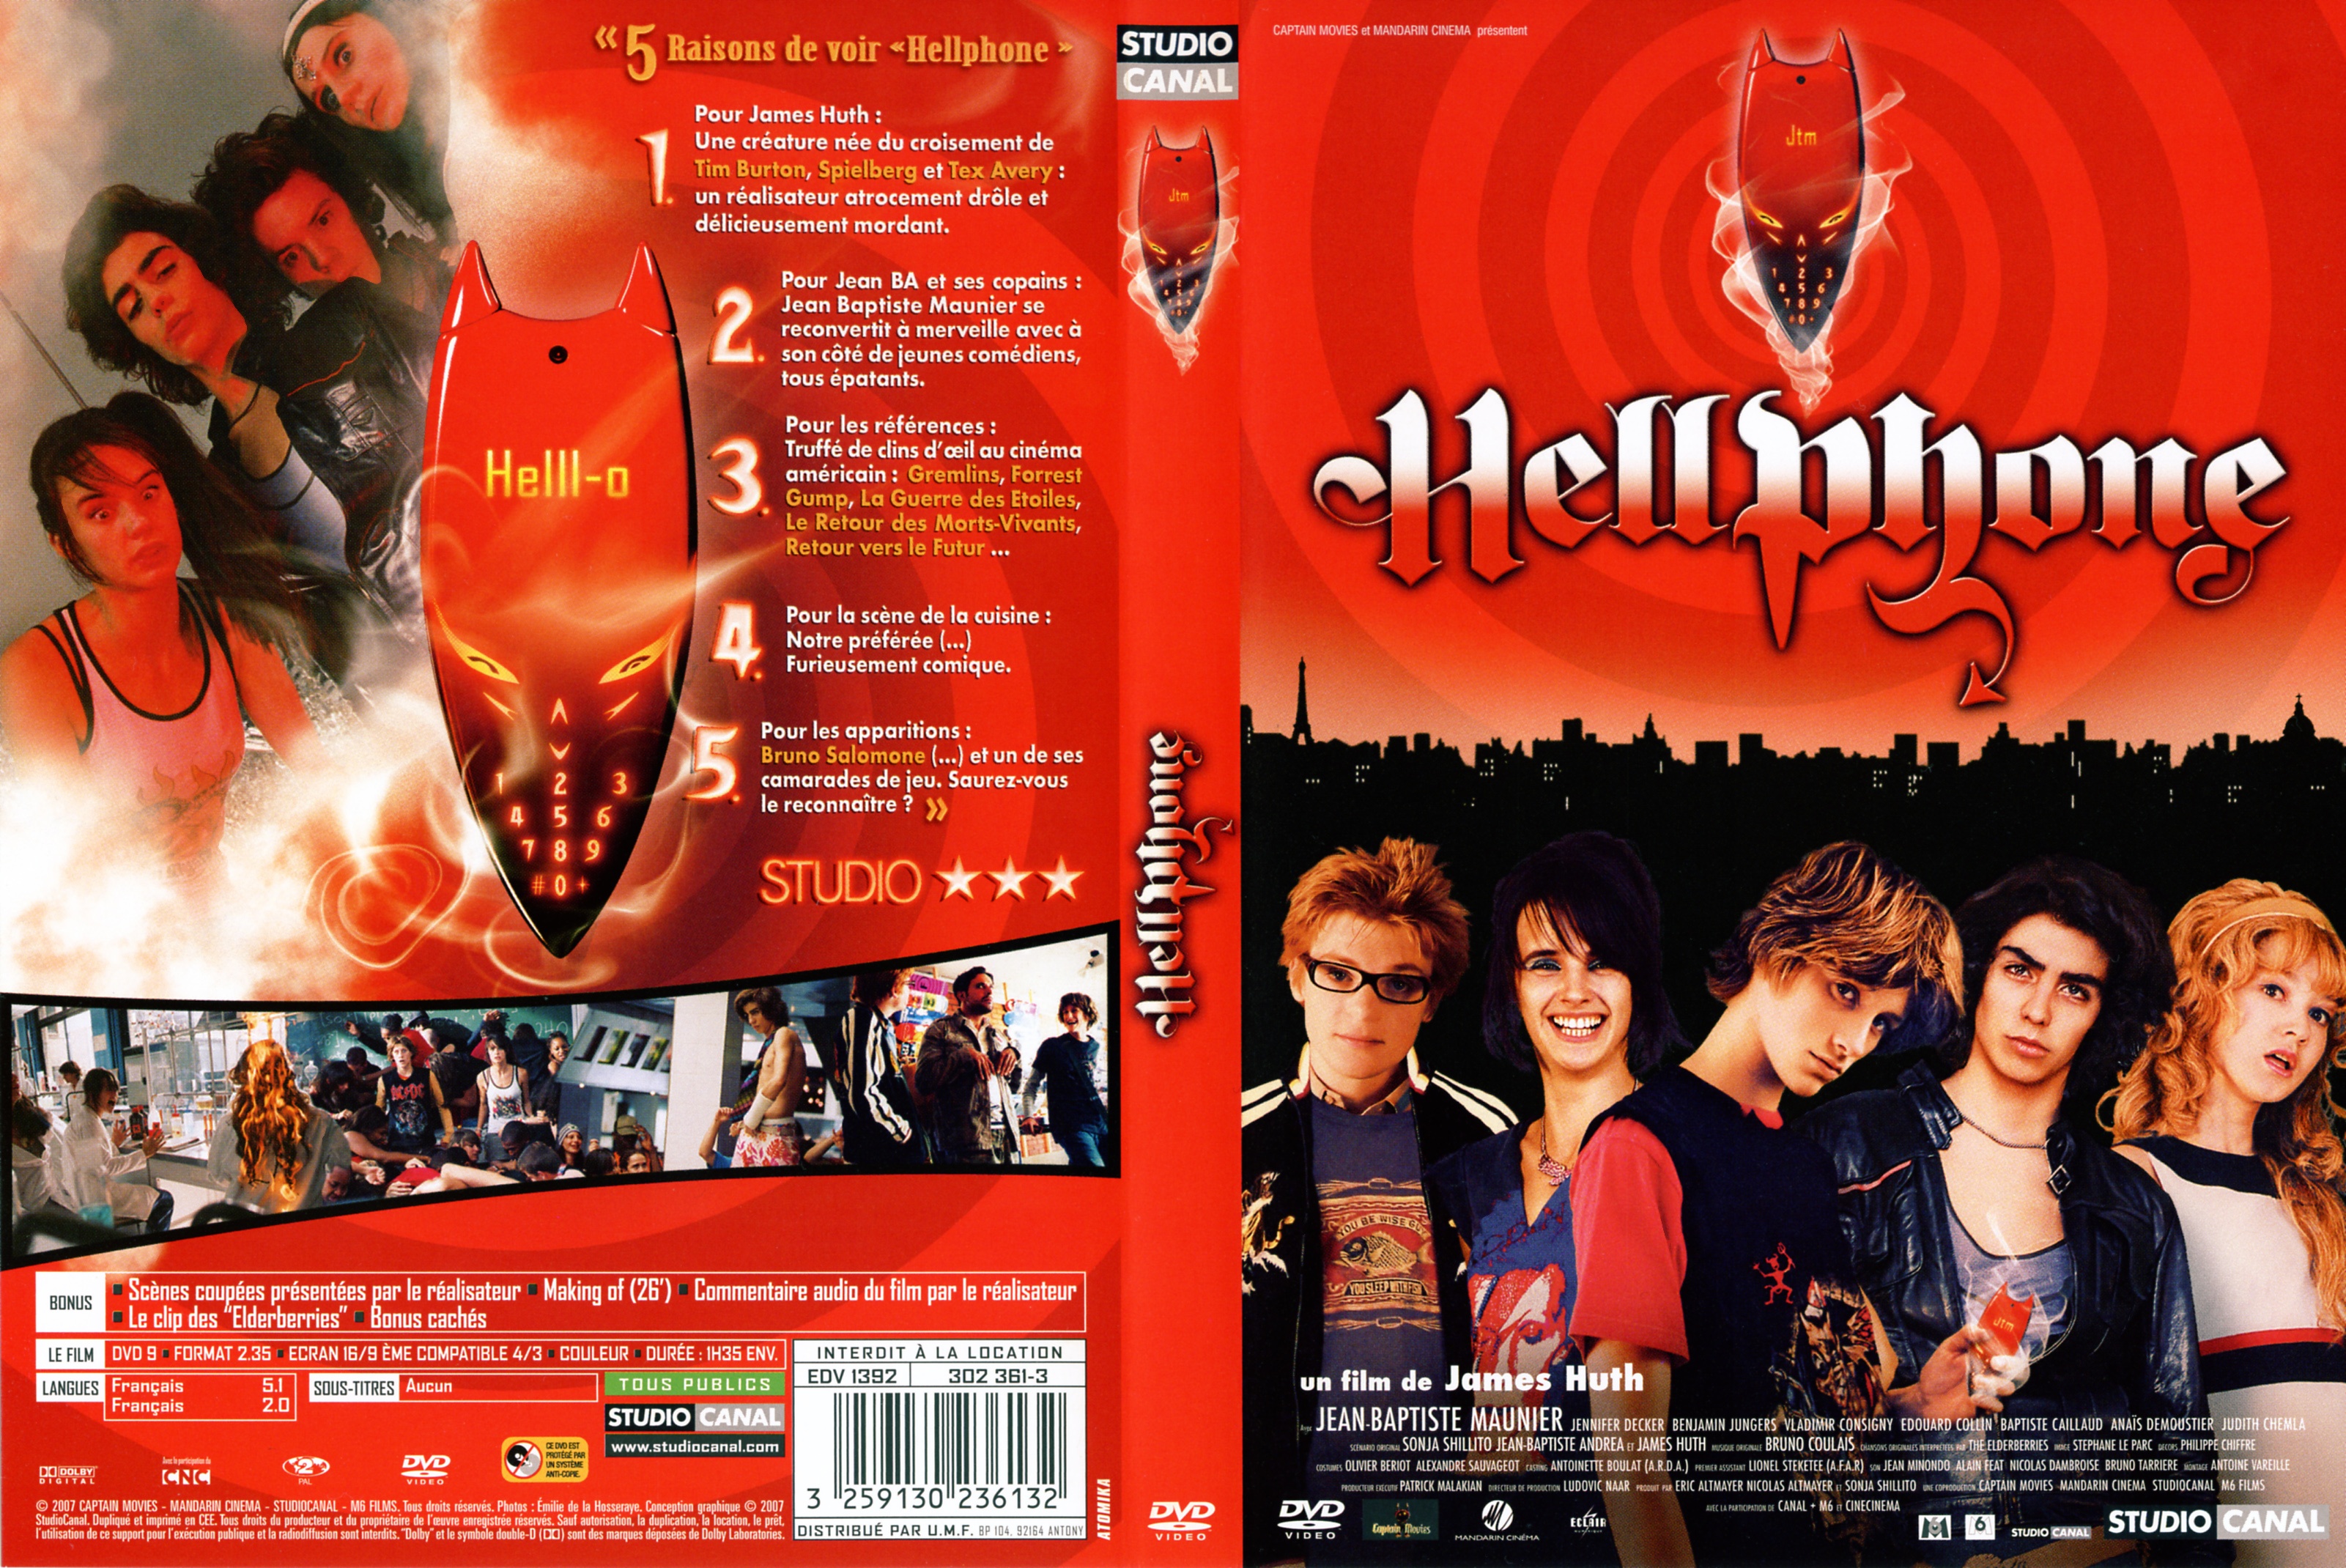 Jaquette DVD Hellphone v2